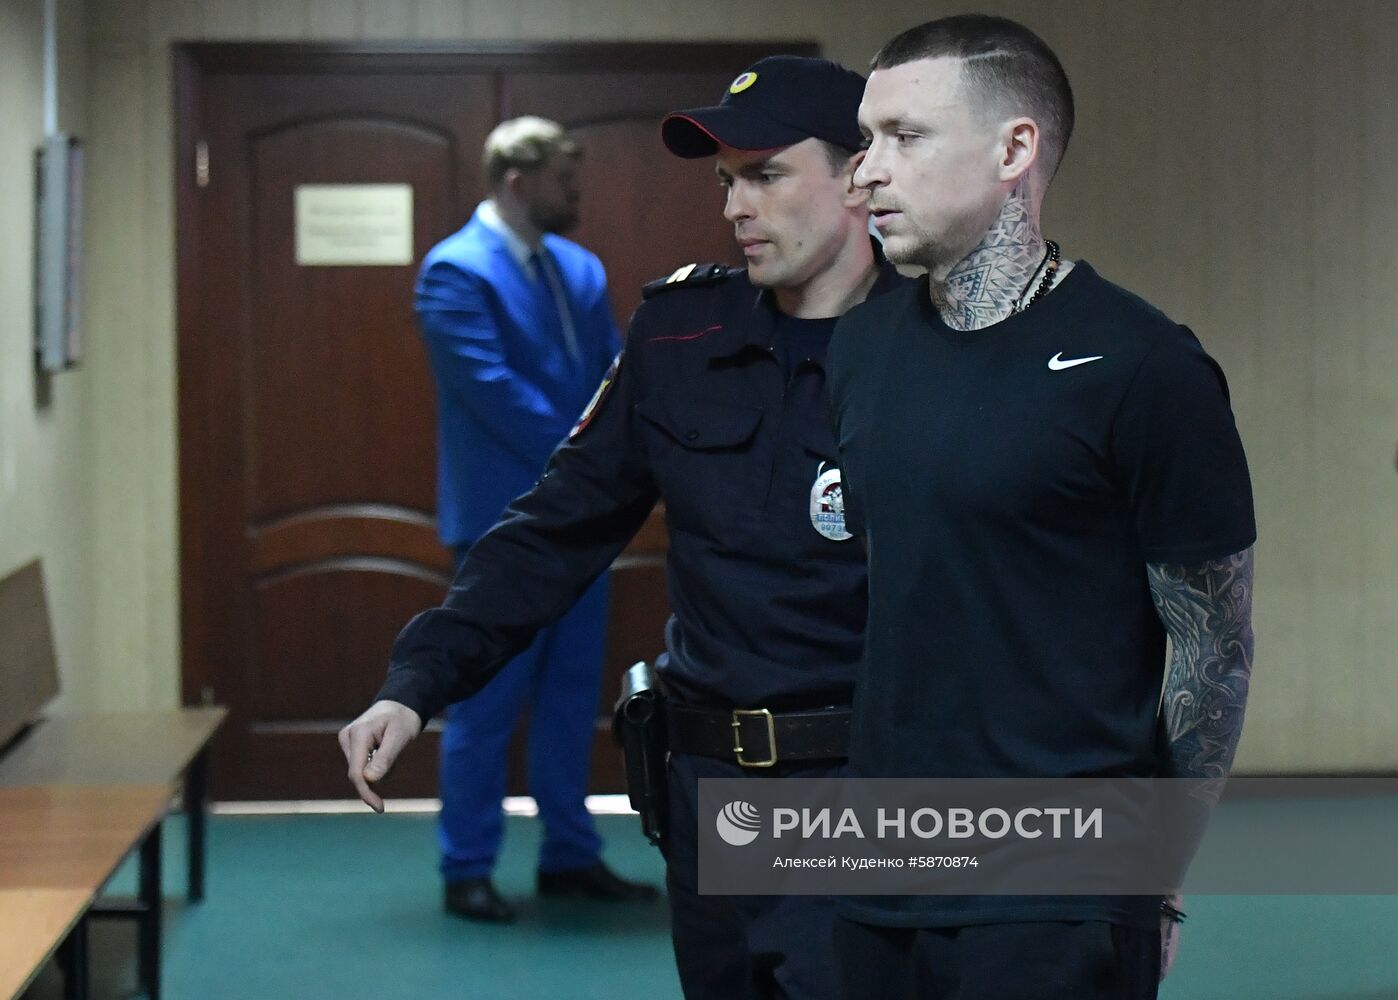 Оглашение приговора А. Кокорину и П. Мамаев